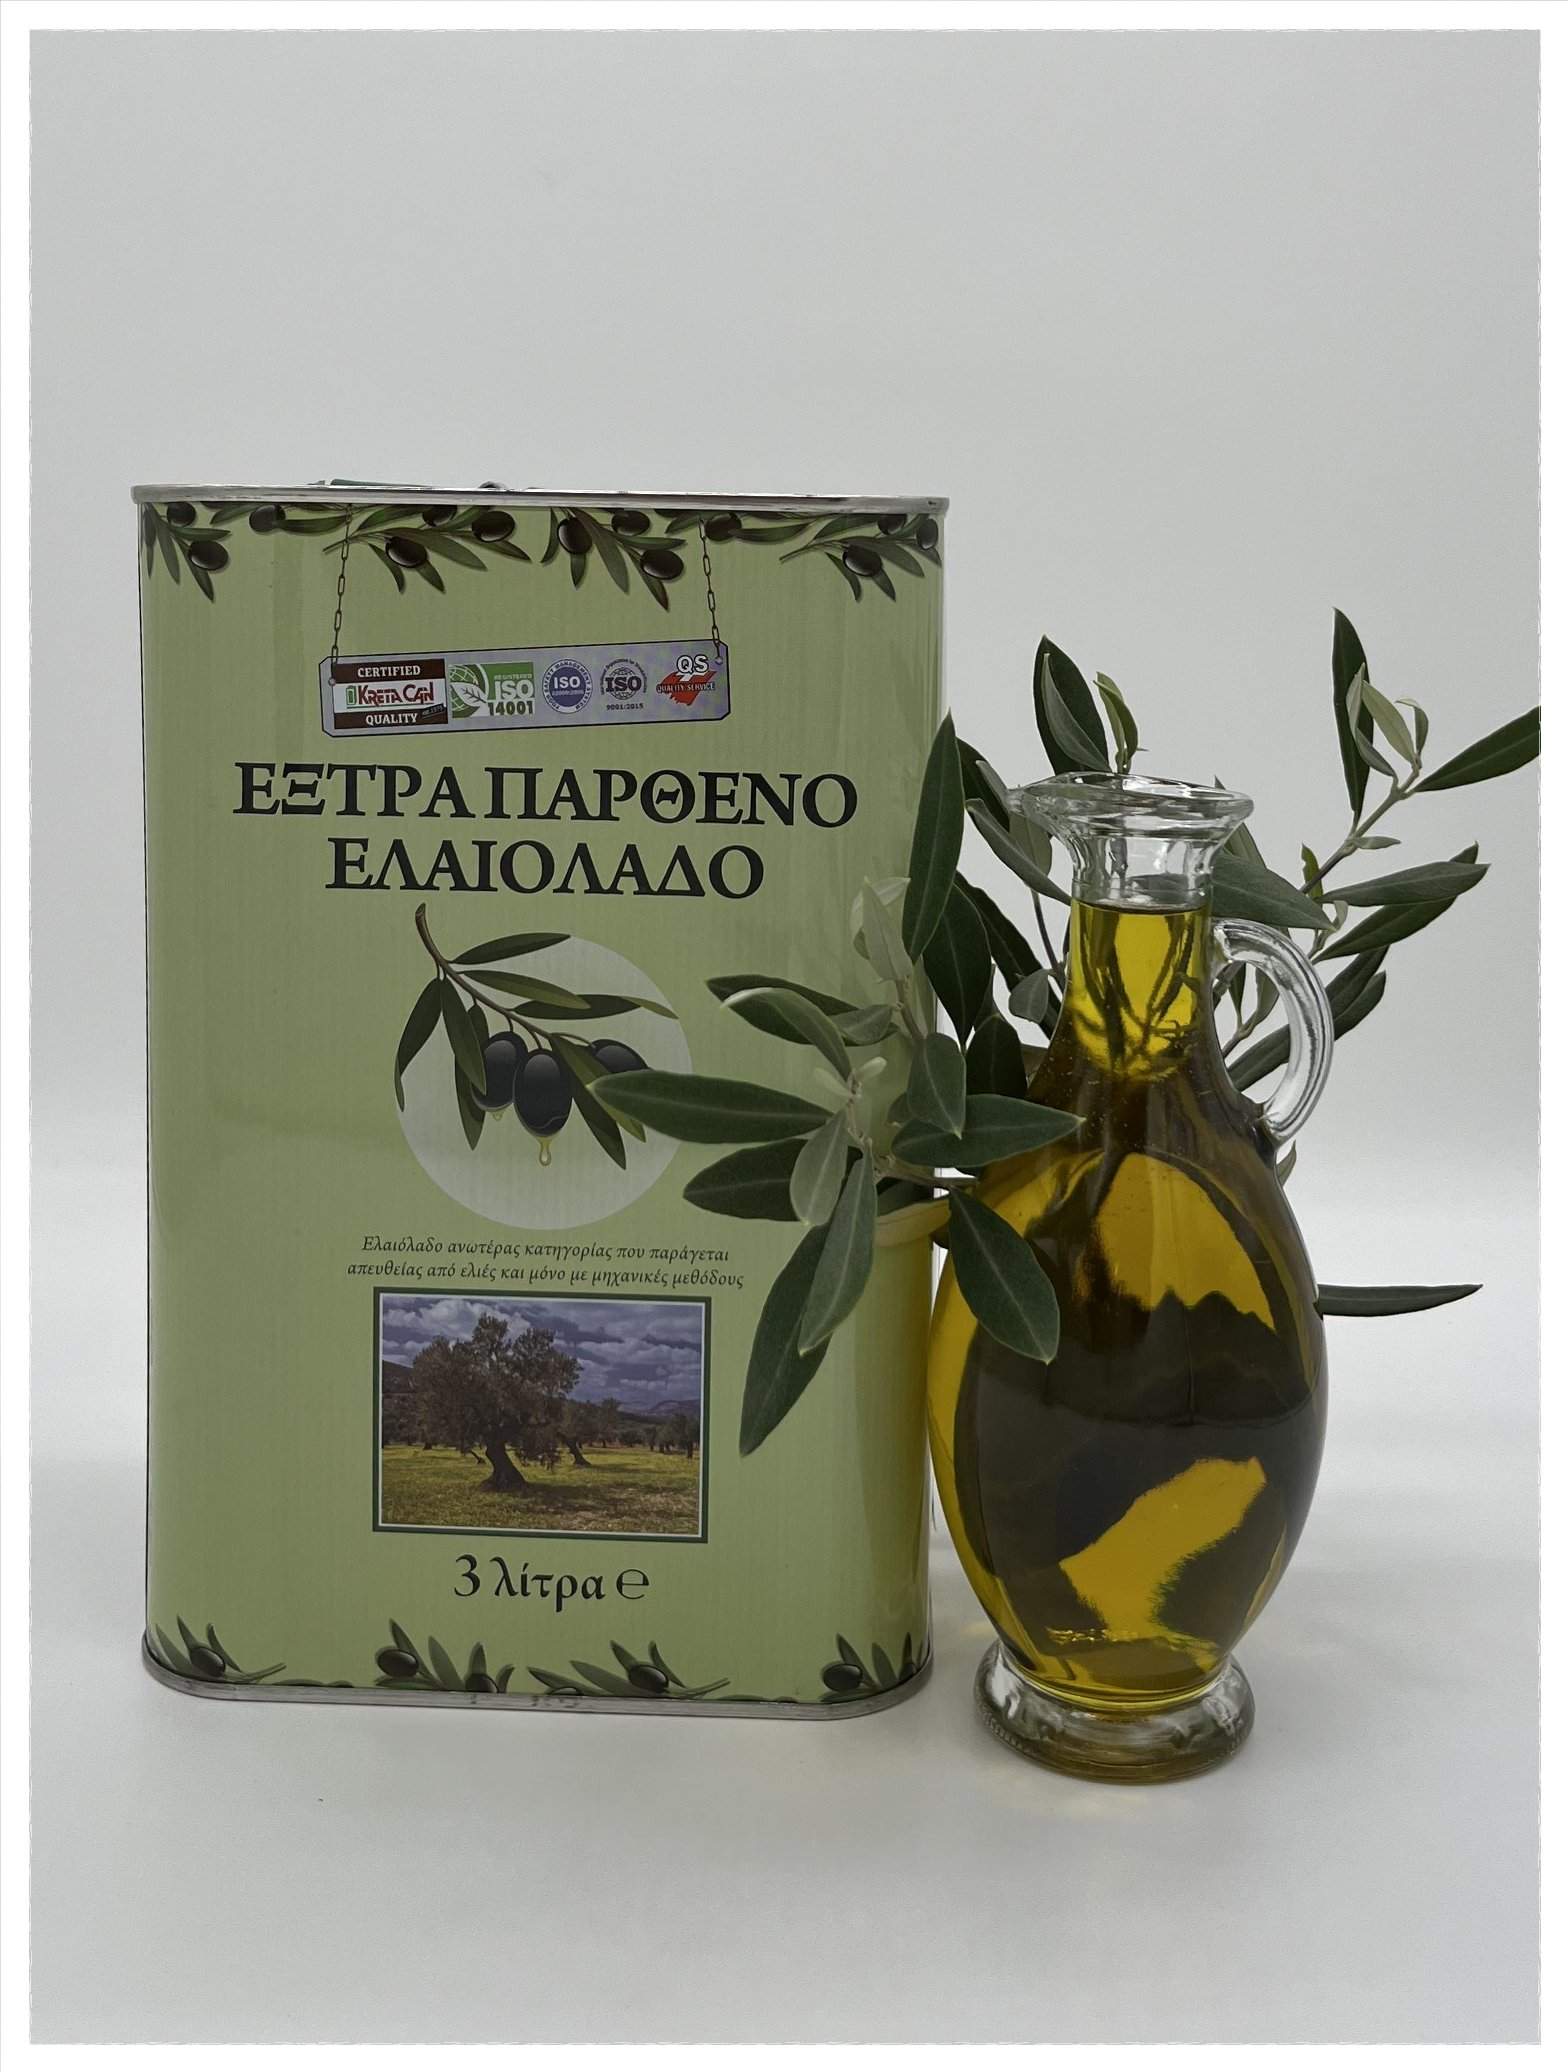 Harmoni's Olivenöl 3,0L Kanister